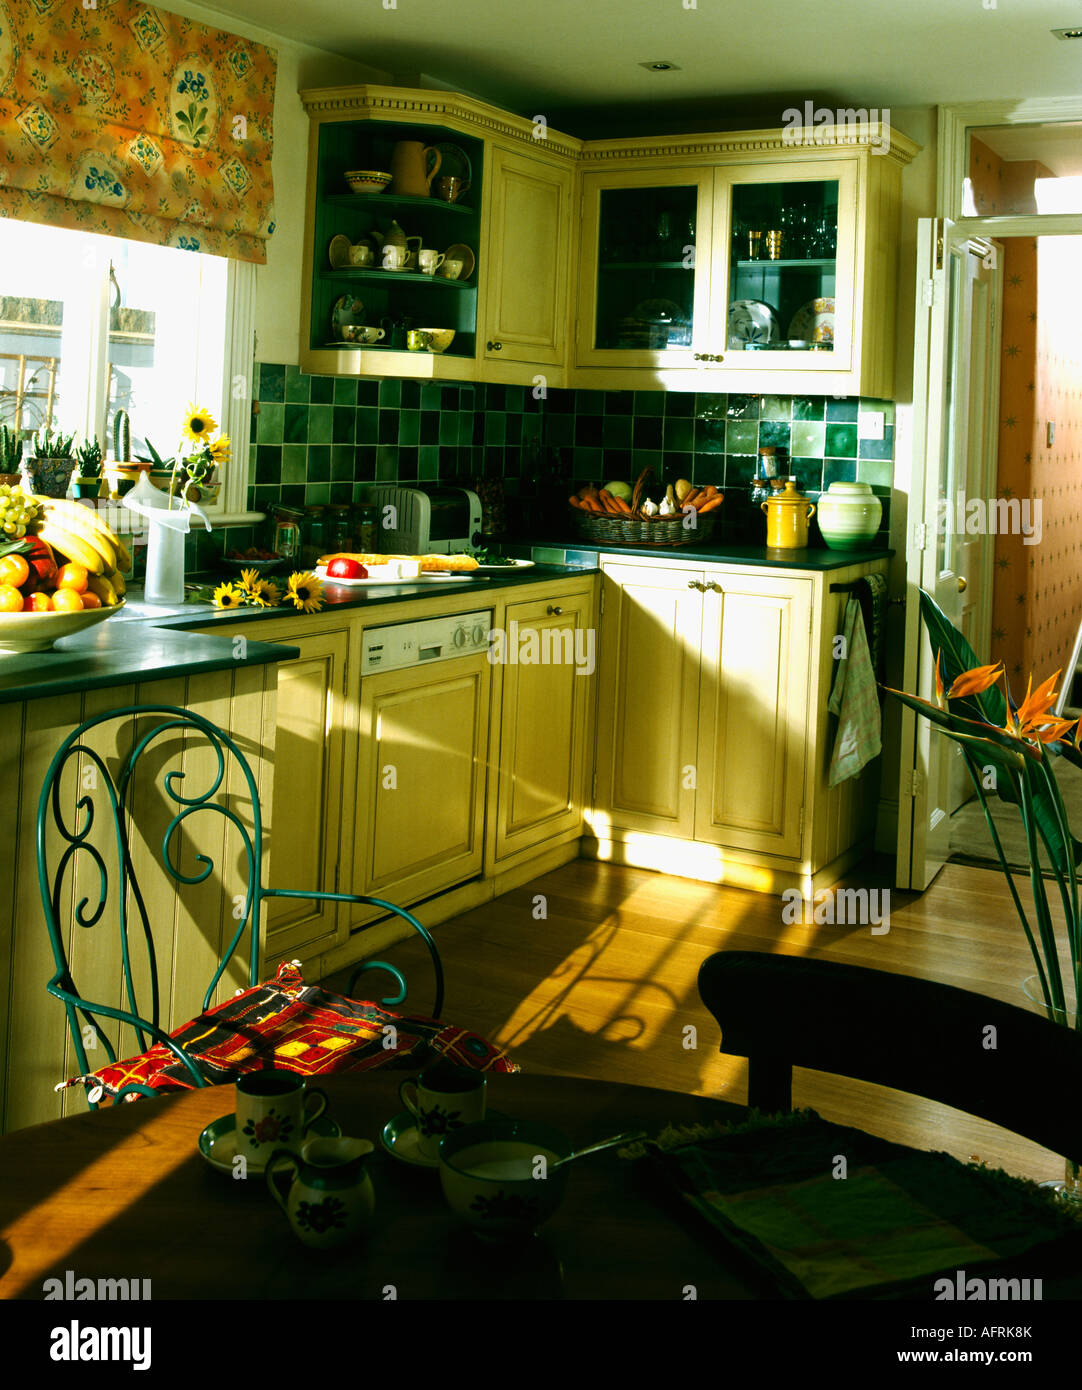 https://c8.alamy.com/comp/AFRK8K/pale-yellow-nineties-kitchen-with-metal-chairs-AFRK8K.jpg